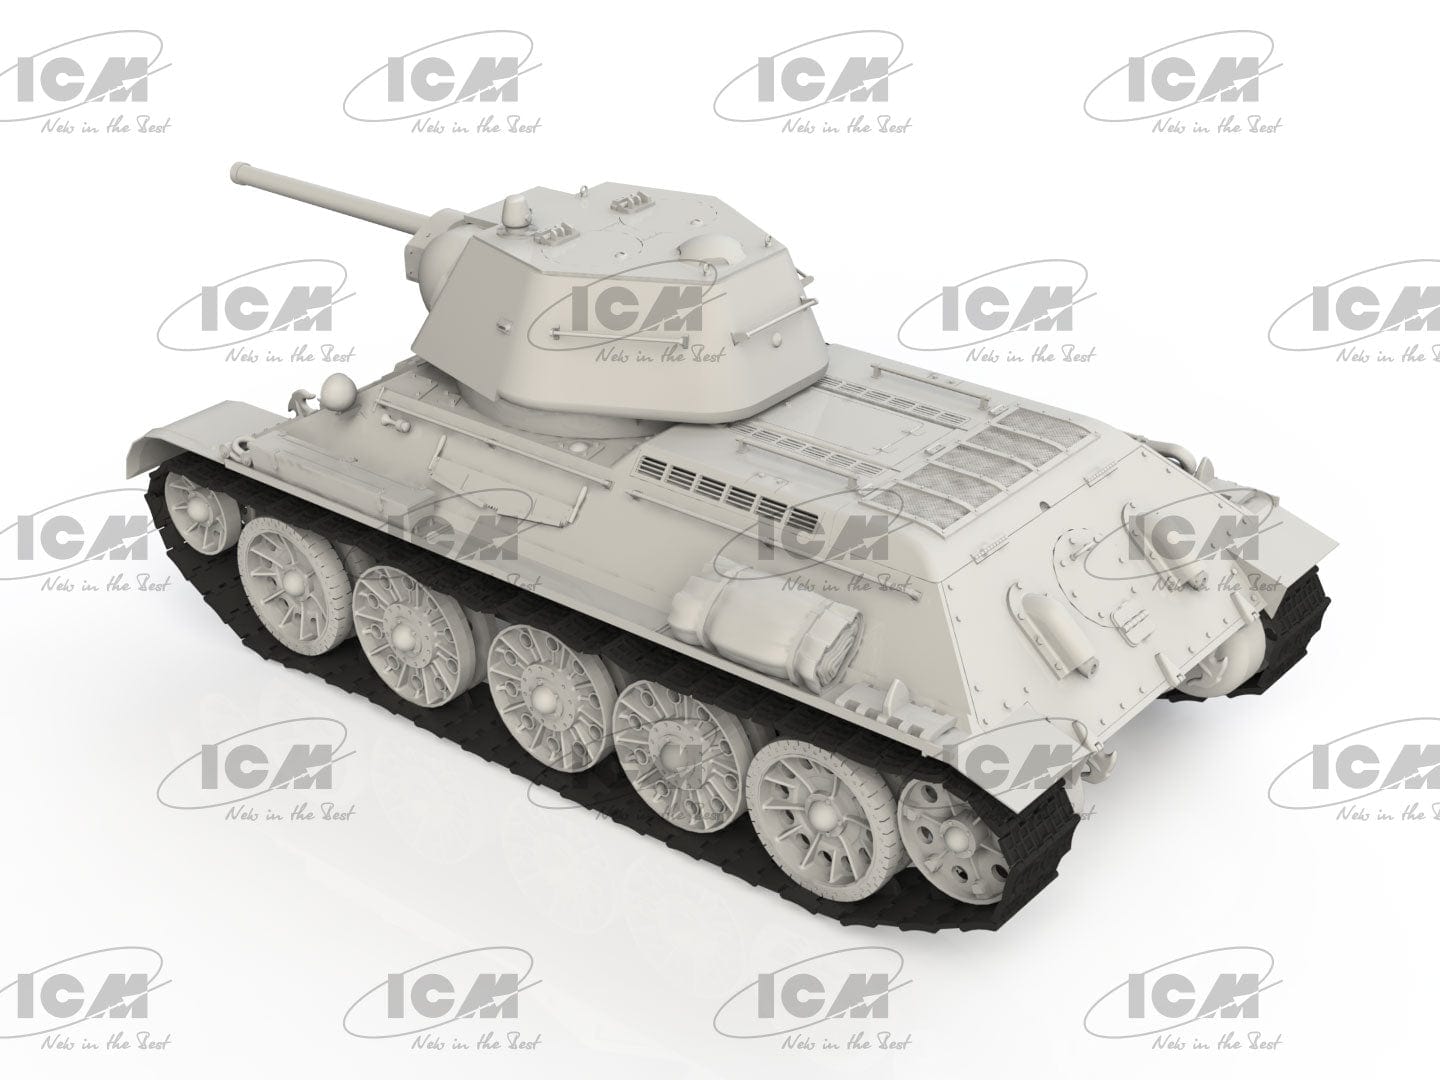 ICM Scale Model Kits 1/35 ICM WWII Soviet Flamethrower Tank ОT-34/76